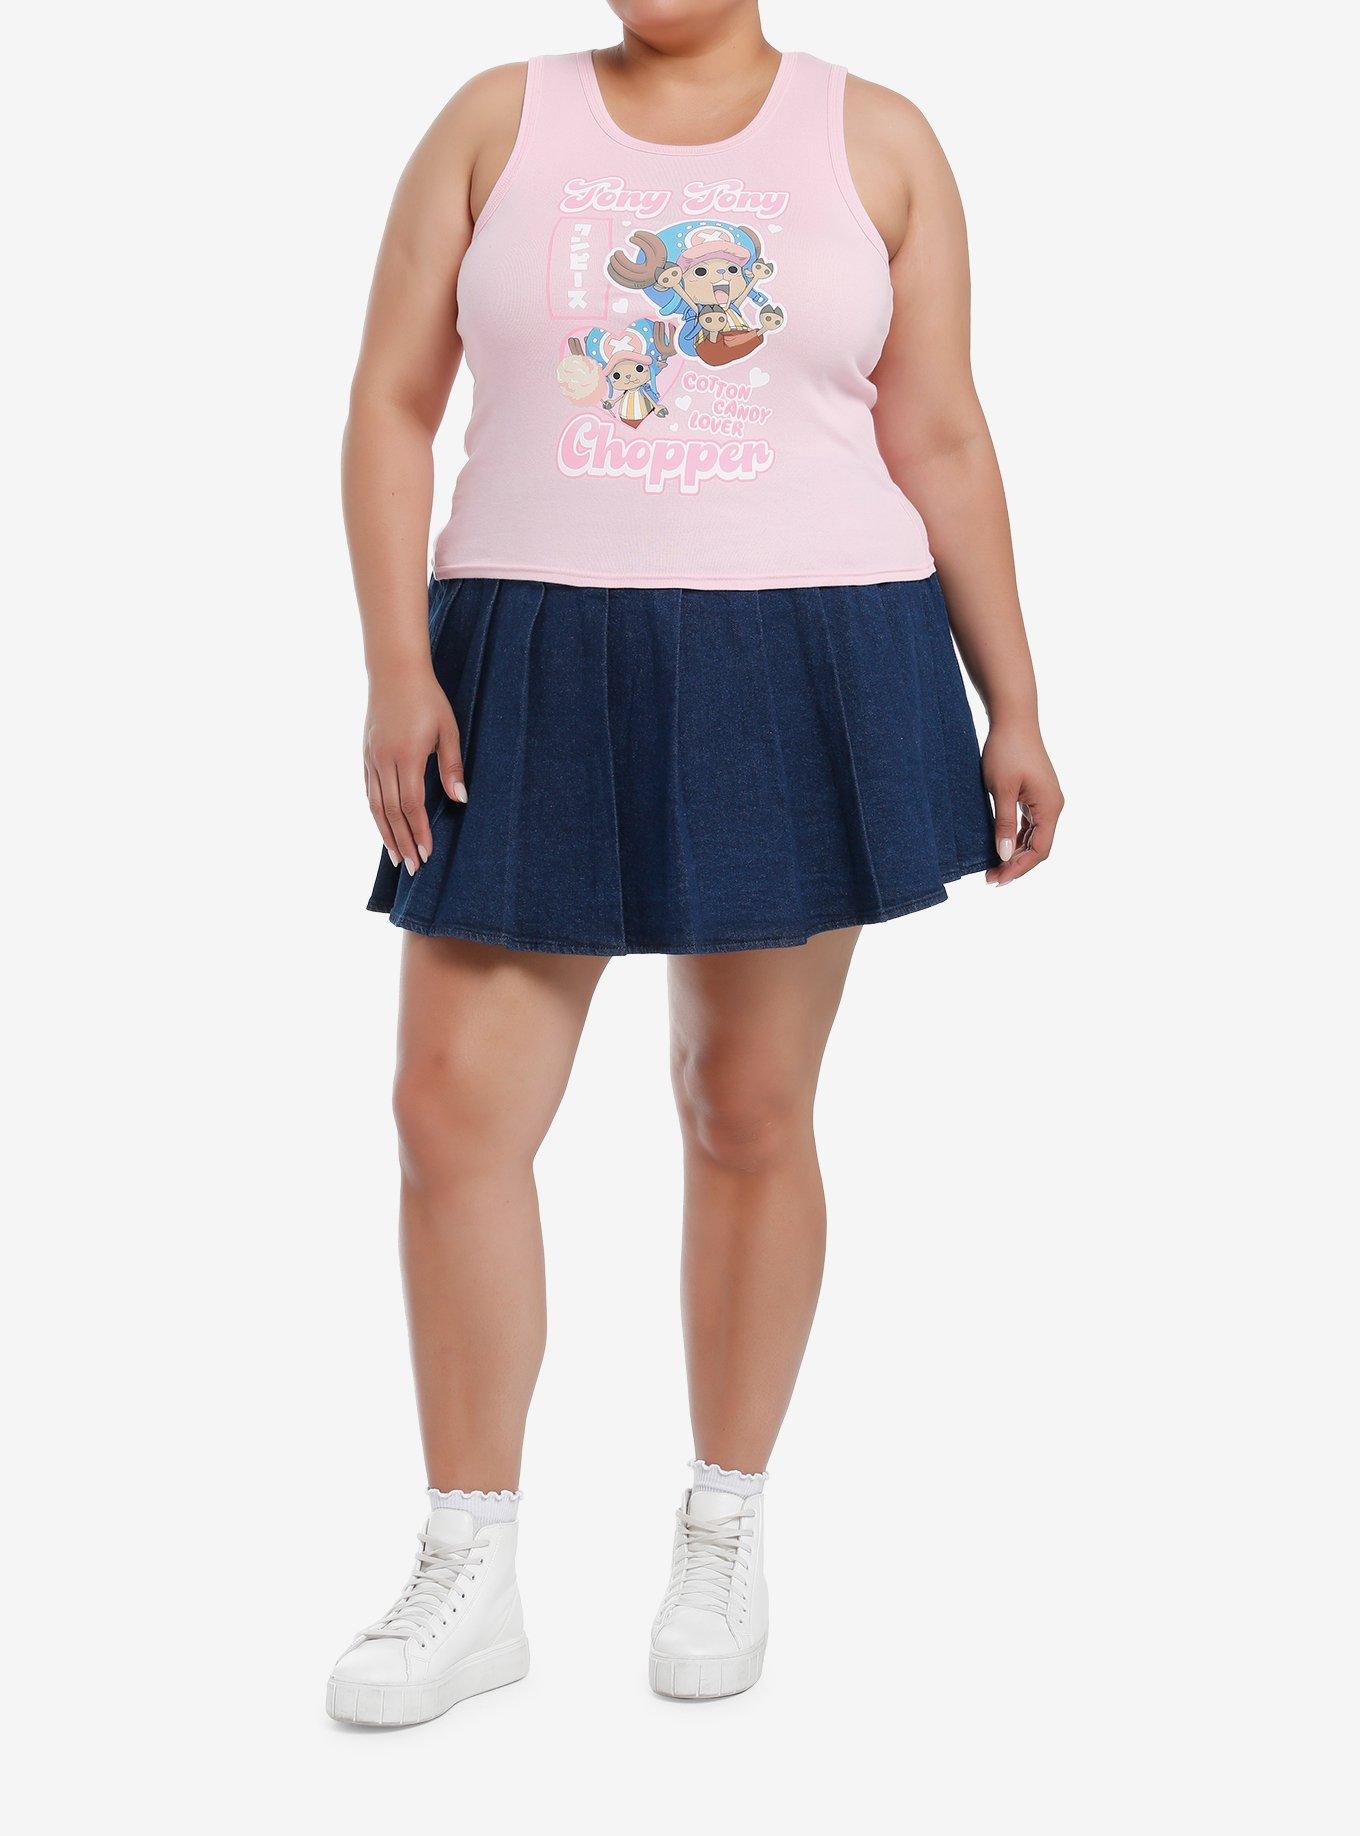 One Piece Chopper Pink Ribbed Girls Tank Top Plus Size, MULTI, alternate